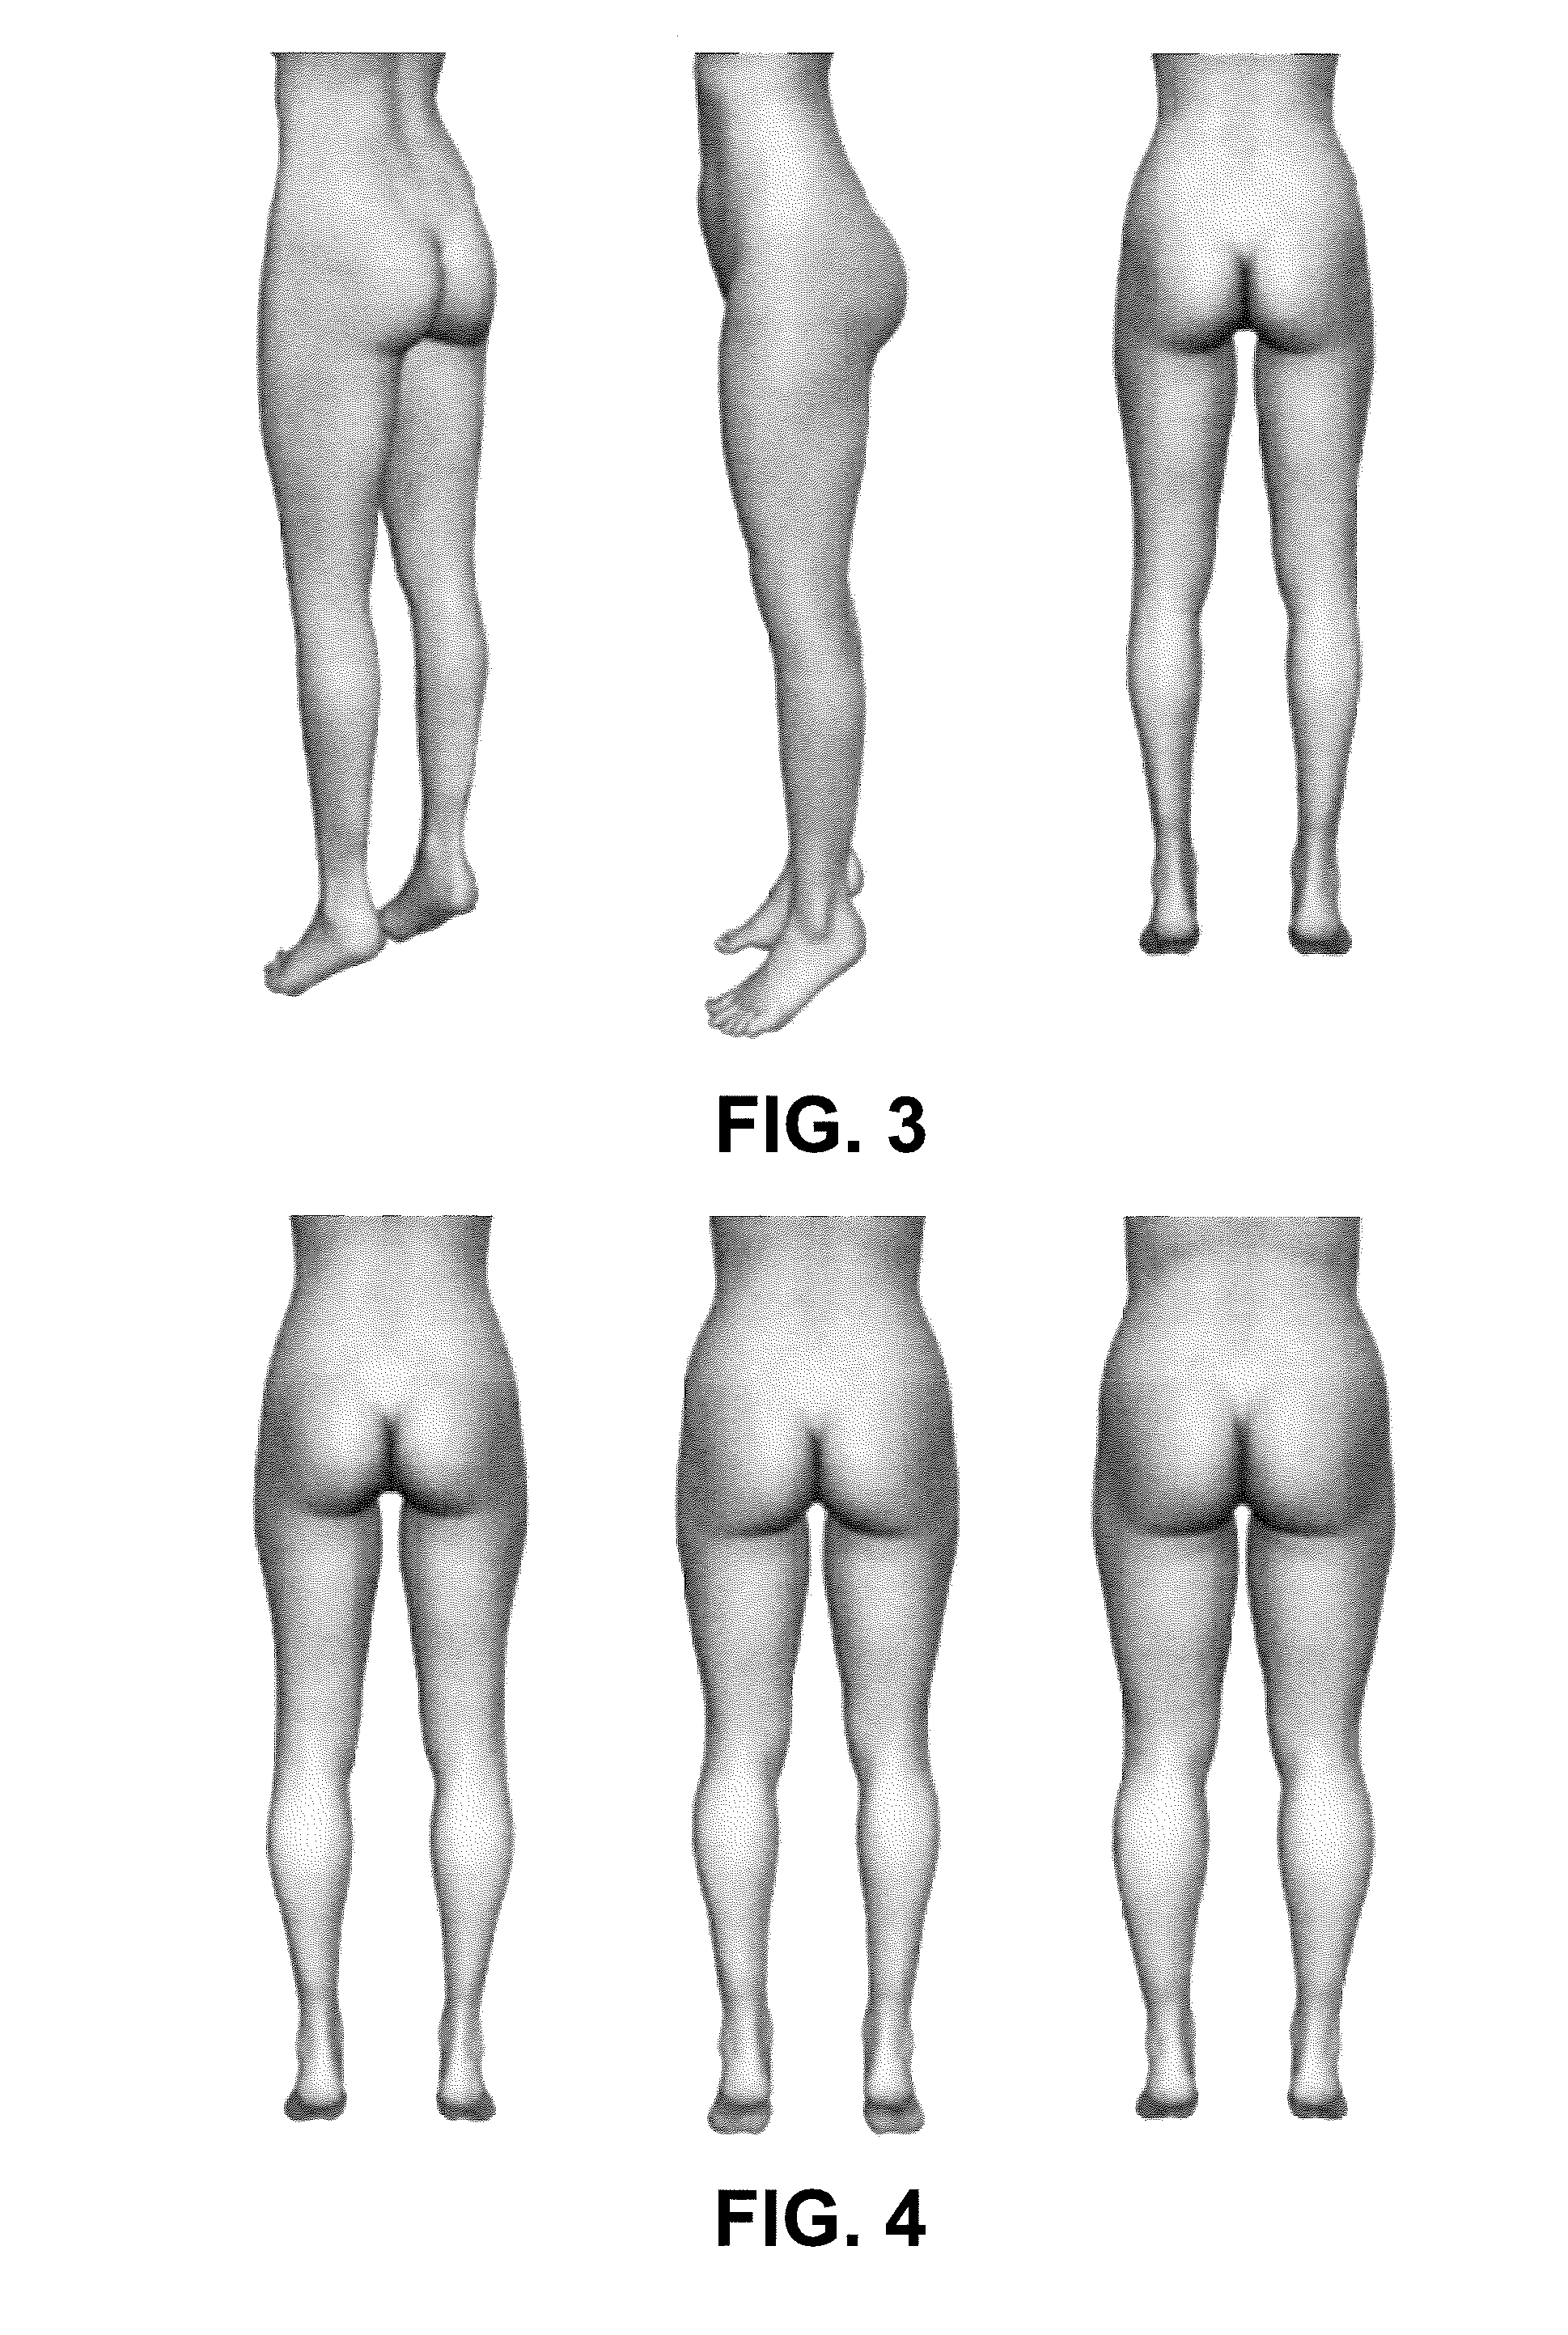 Anatomy shading for garments